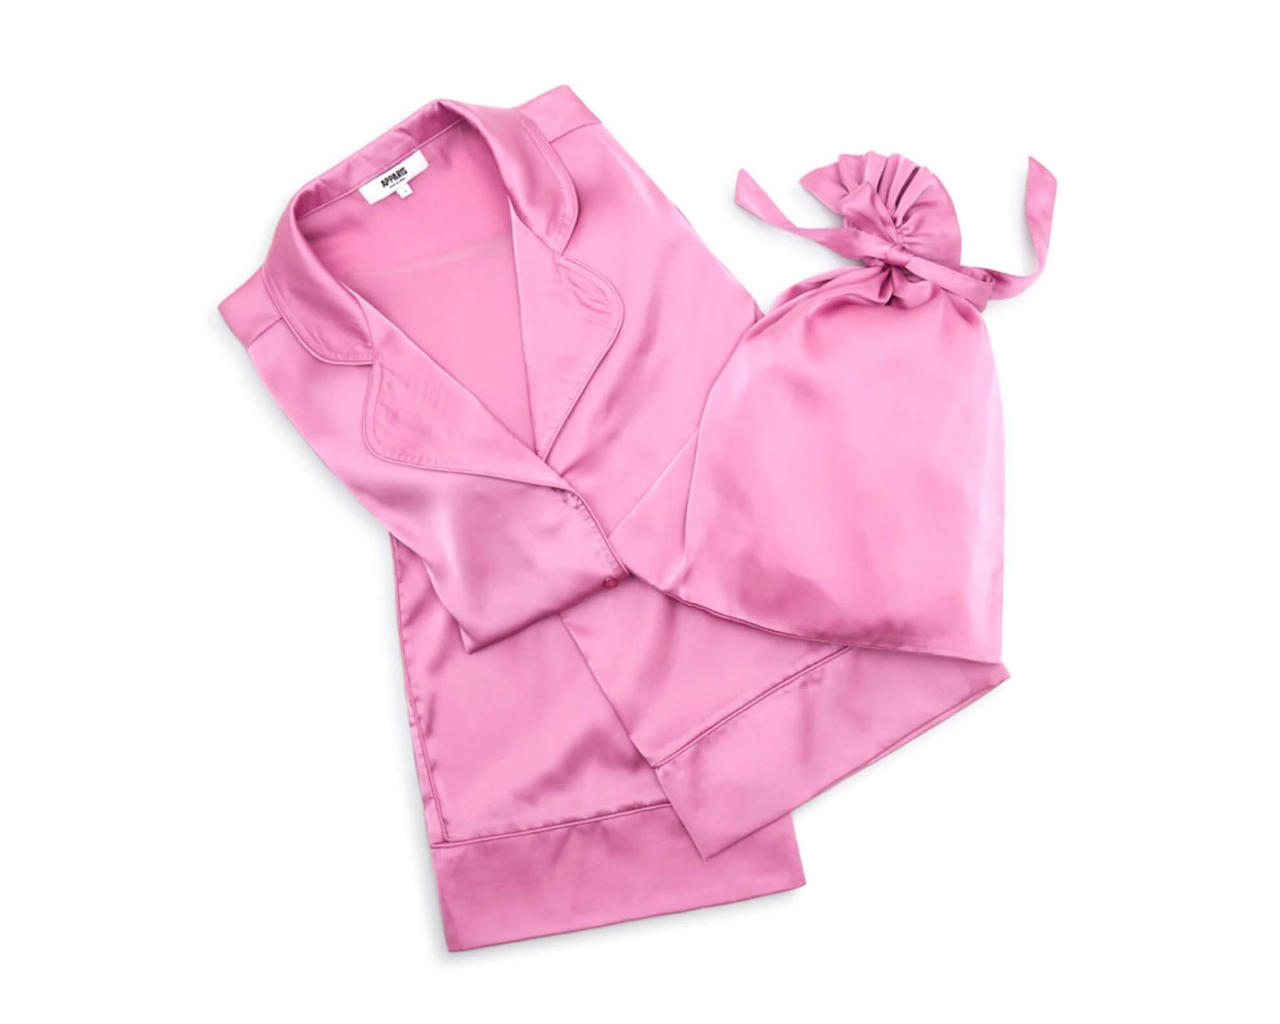 Joan Smalls Silk Pajama Sets